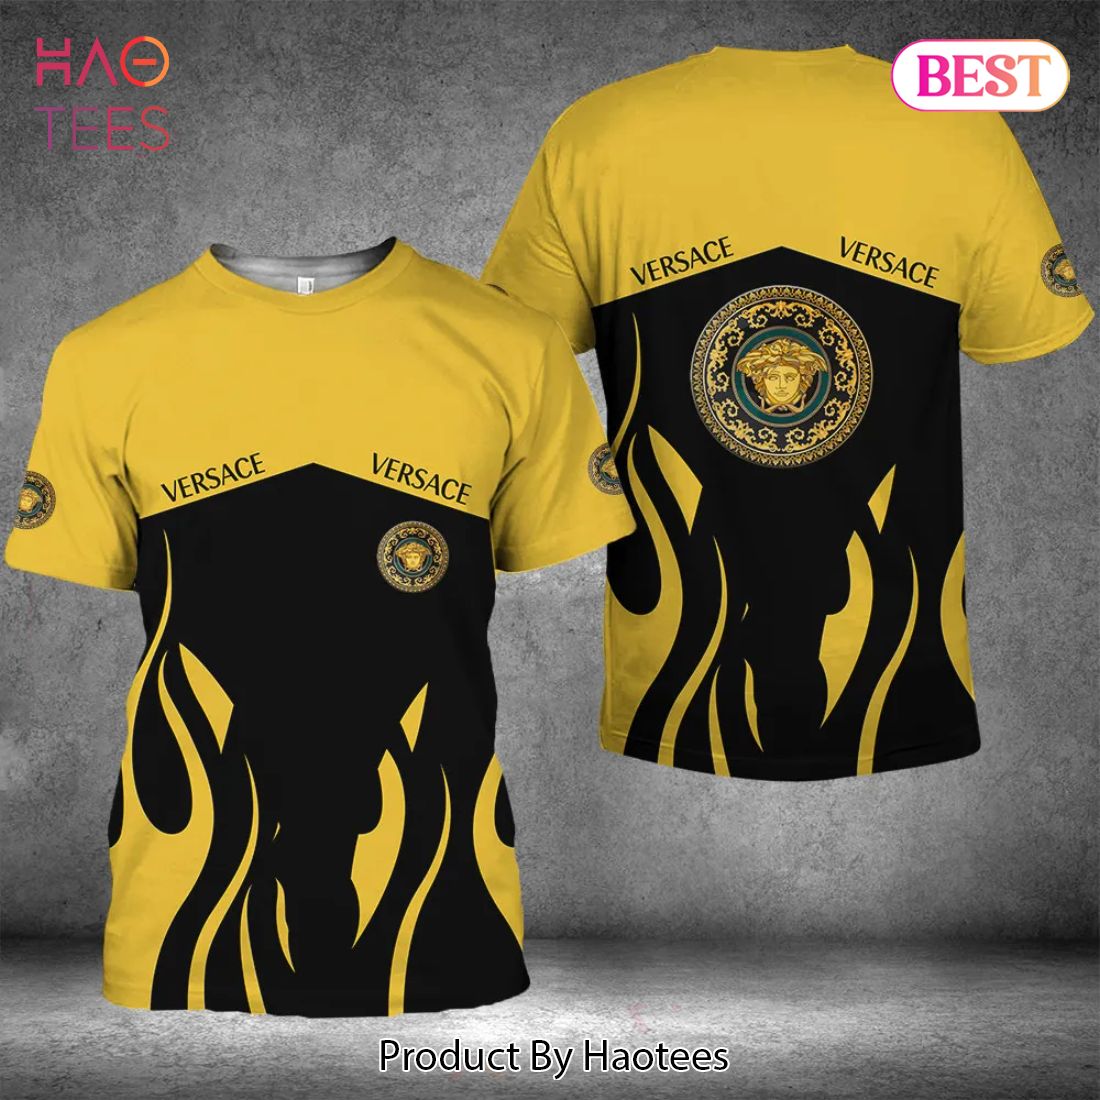 [NEW FASHION] Versace Medusa Yellow Black Luxury Brand T-Shirt Outfit For Men Women